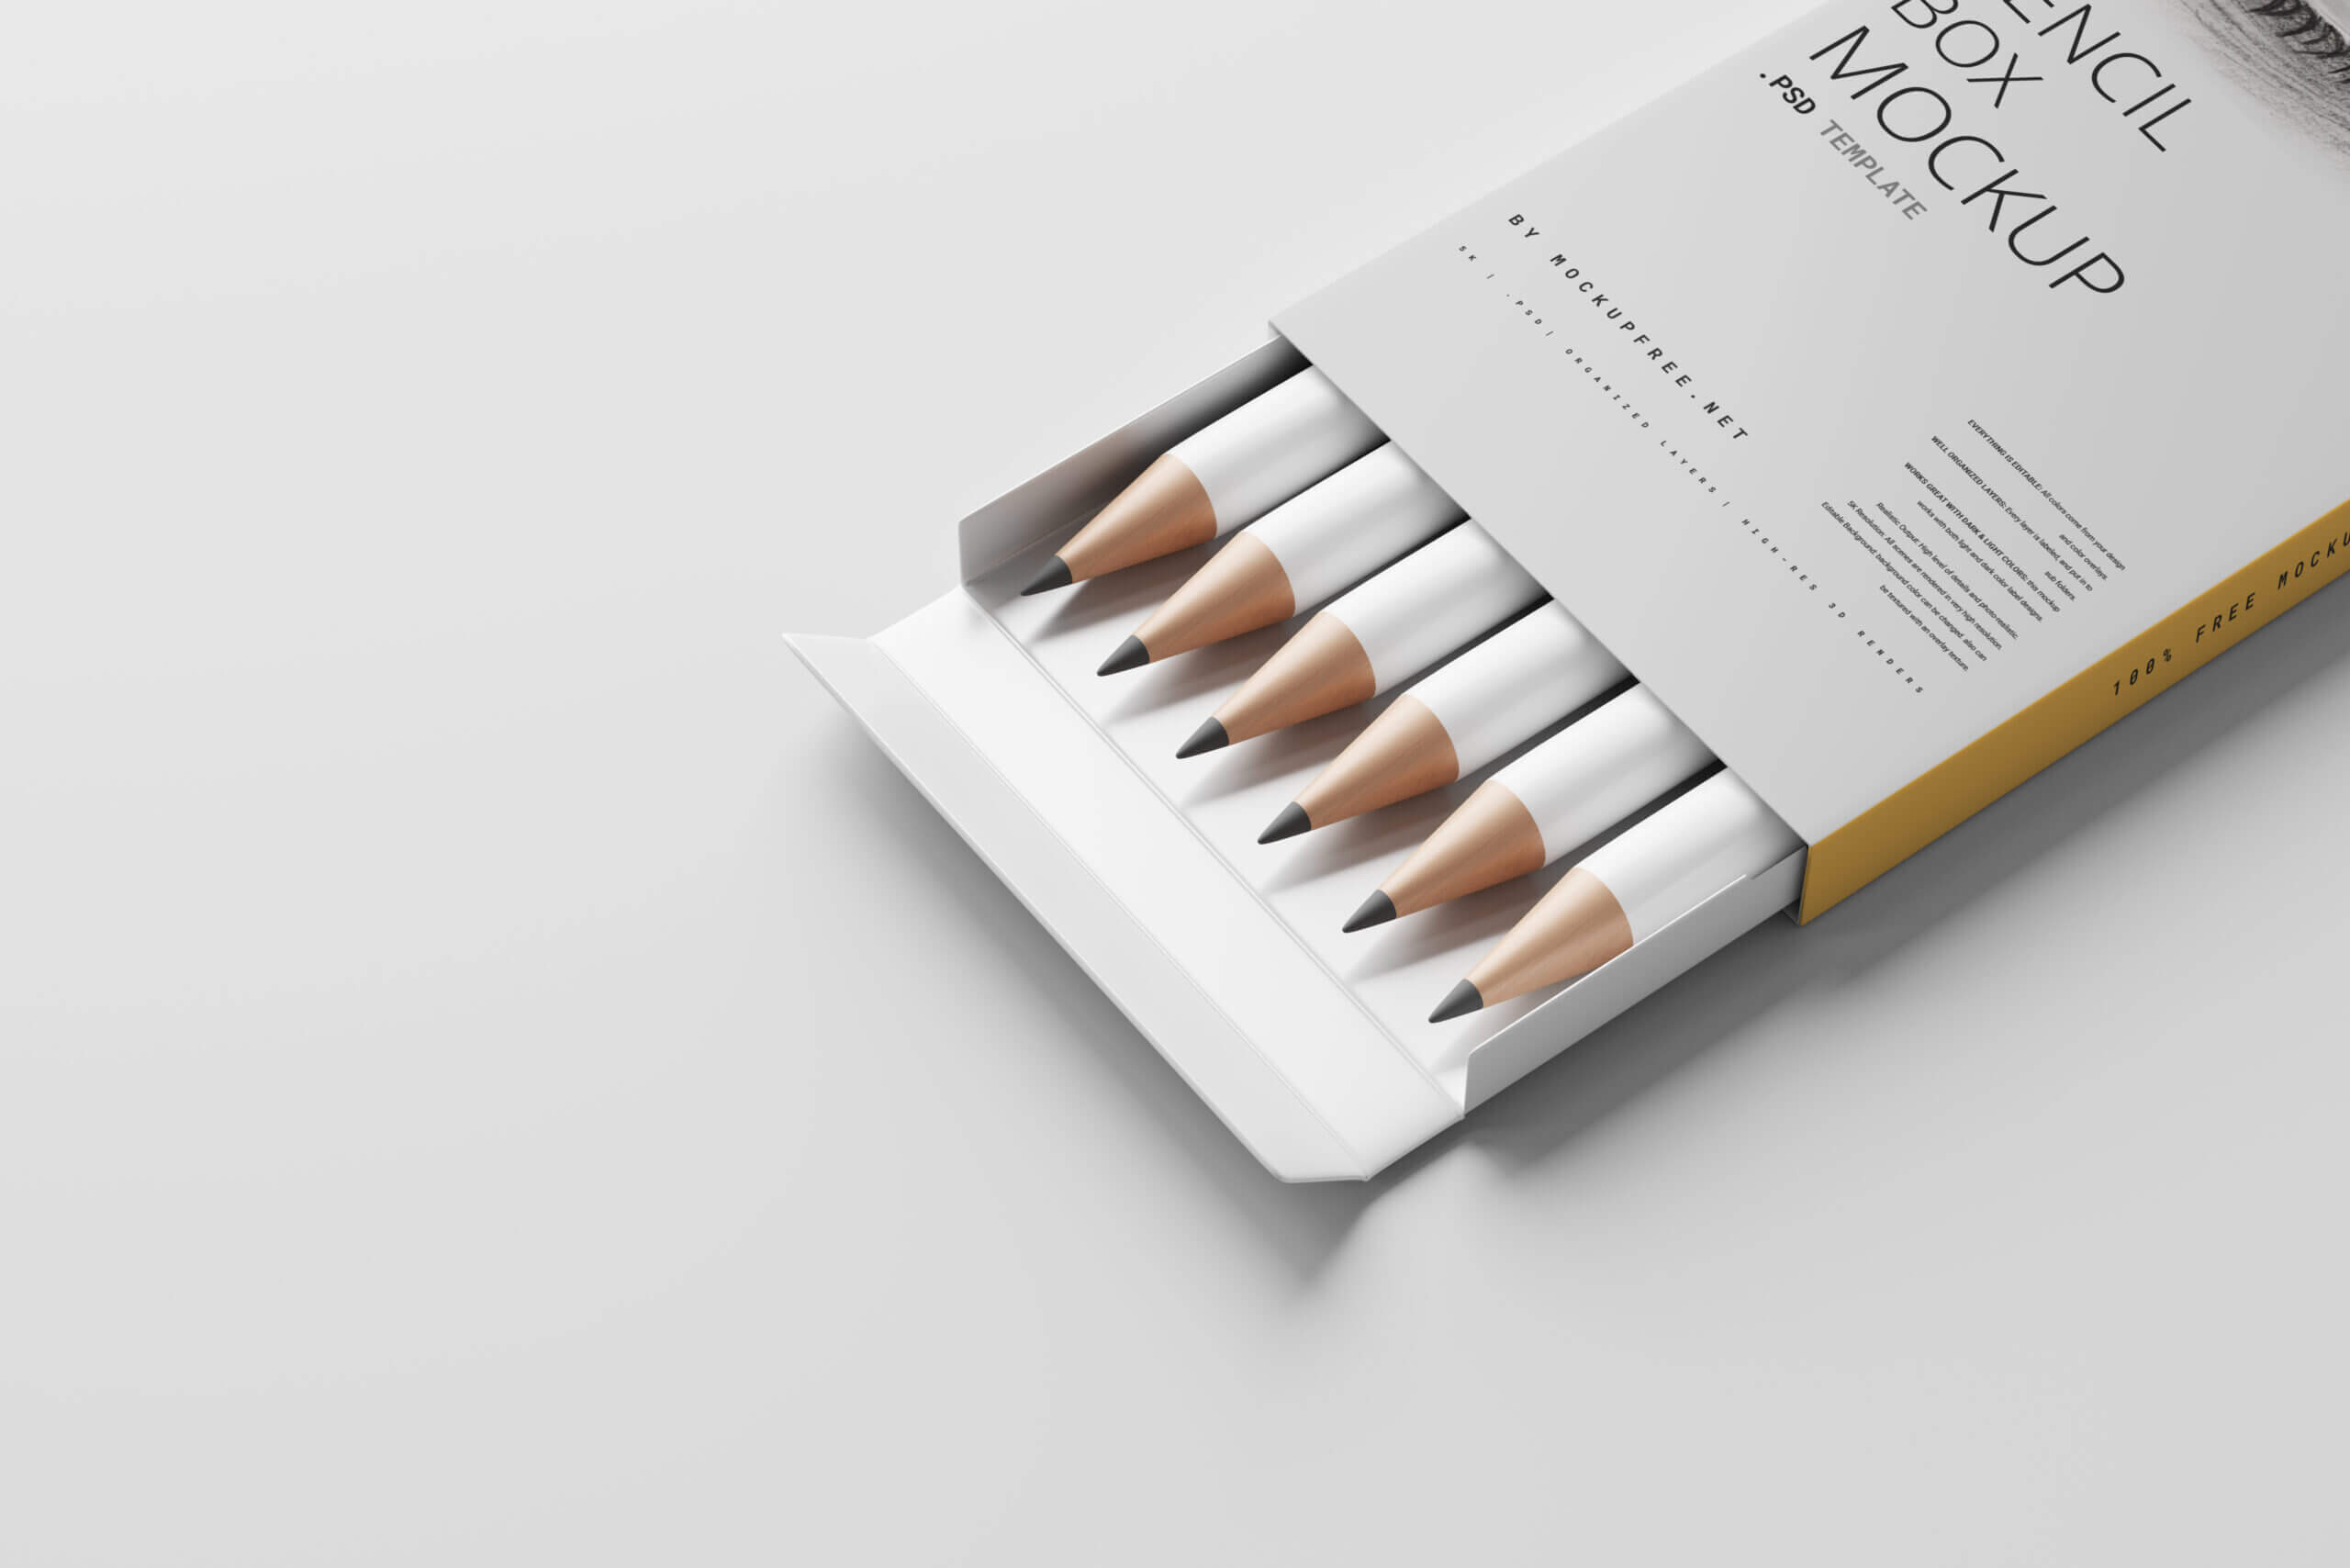 6 Free Lead Pencil Box Packaging Mockup PSD Files6